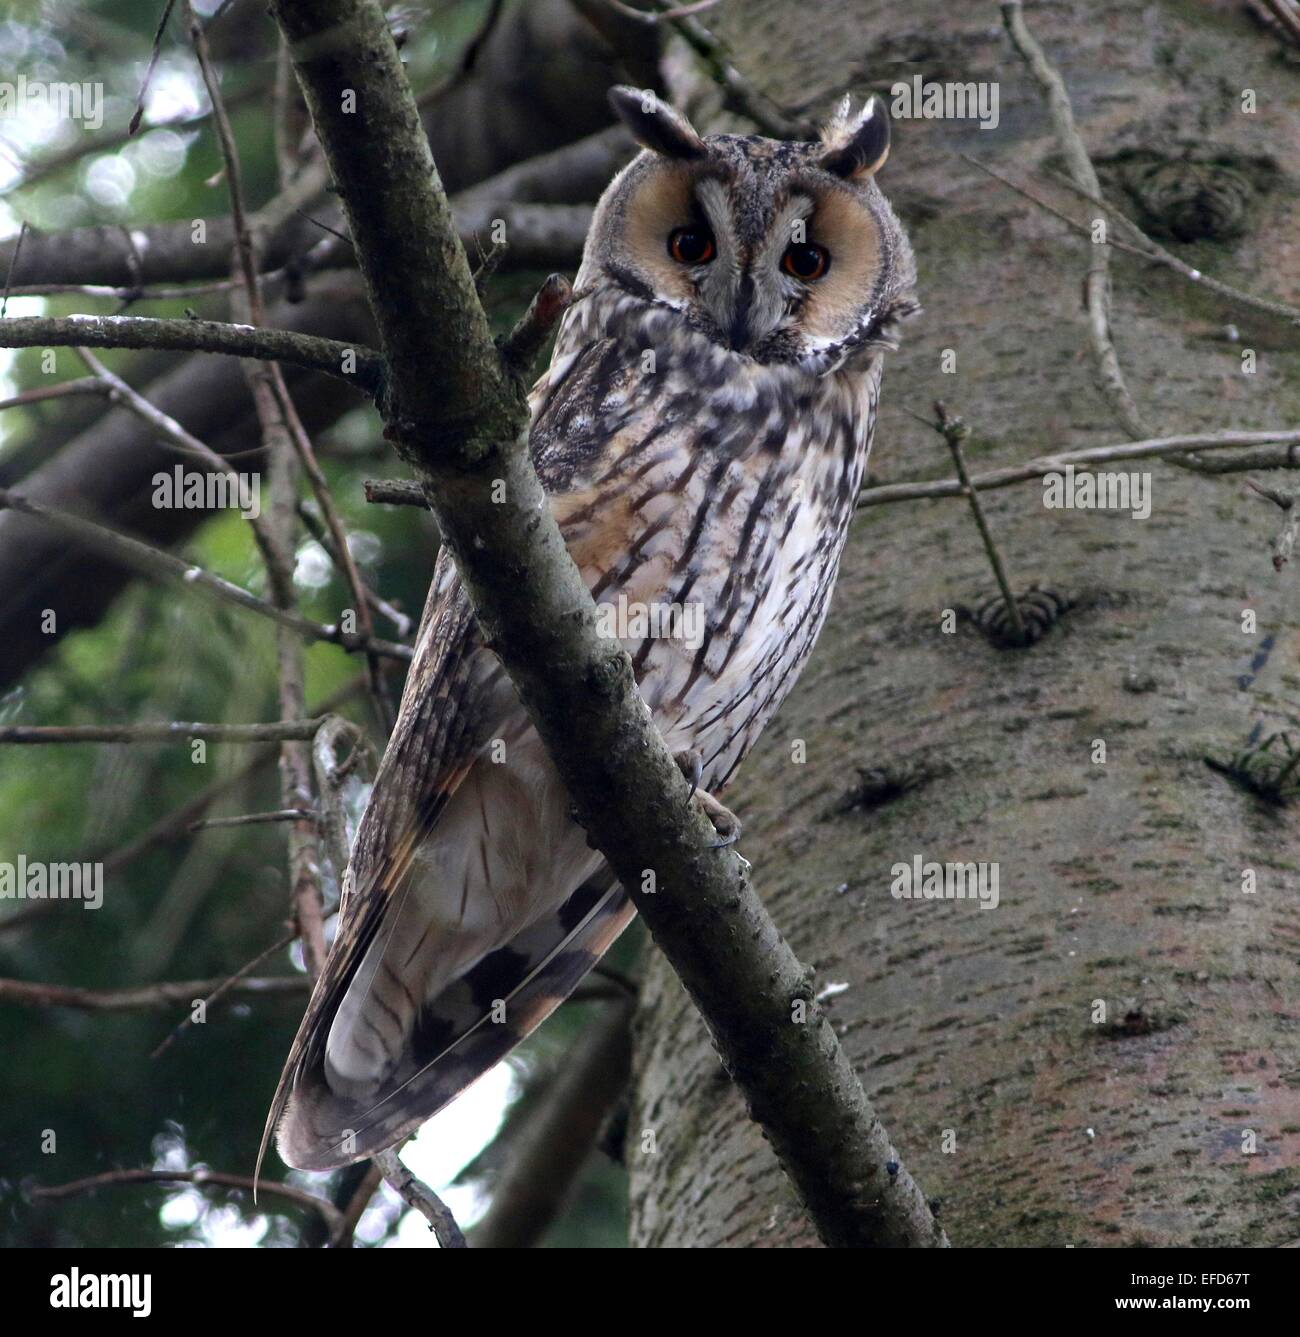 Very alert and awake Long-eared Owl (Asio otus) in a pine tree during daytime, facing camera Stock Photo